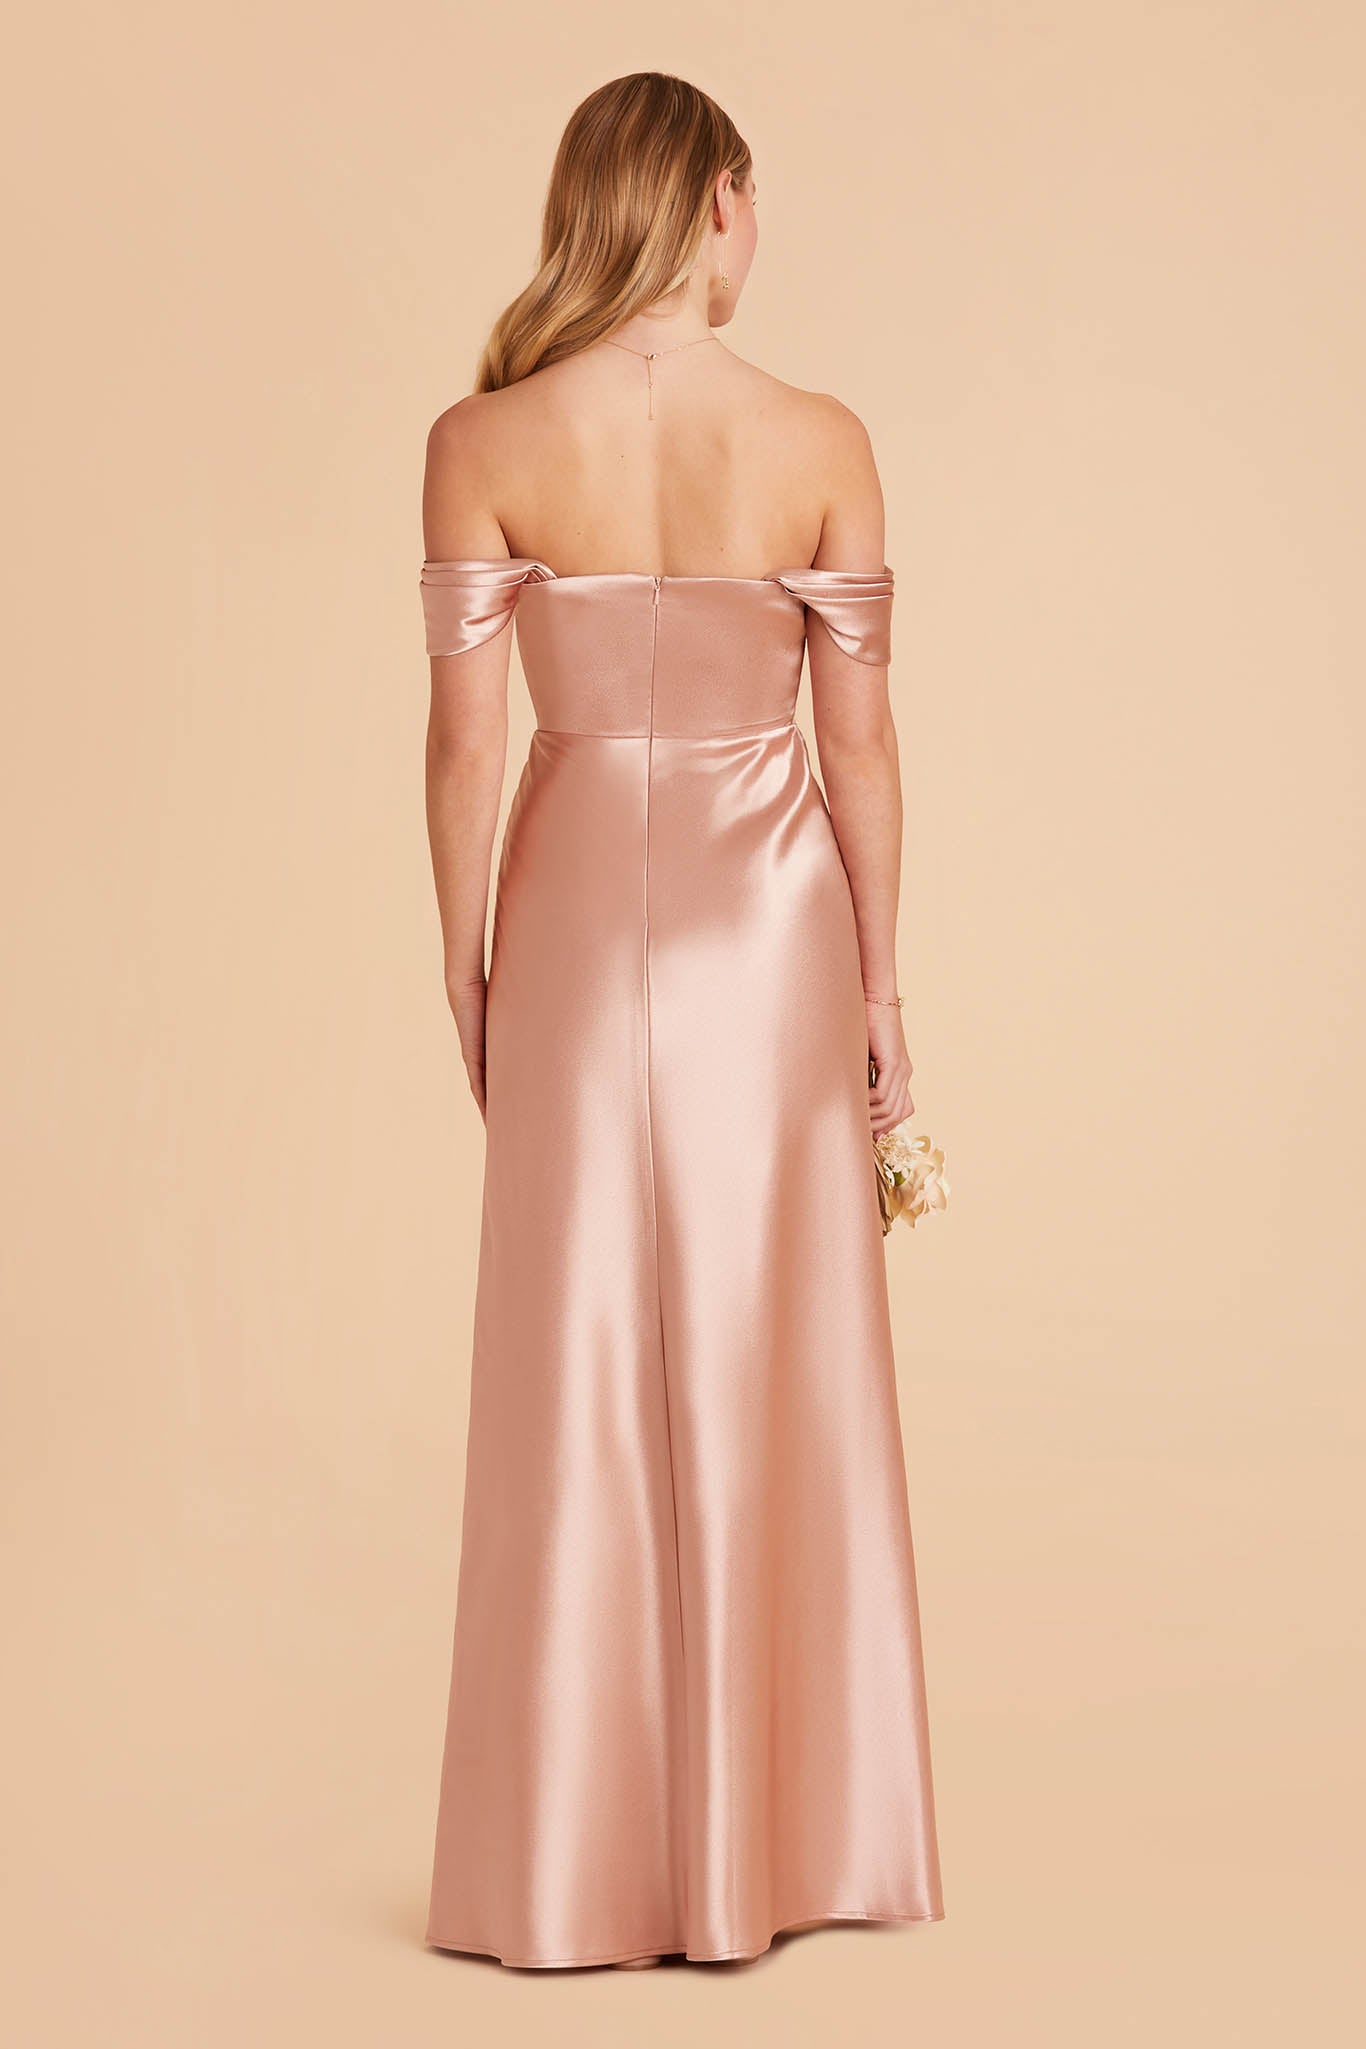 rose gold pink satin bridesmaid dress 